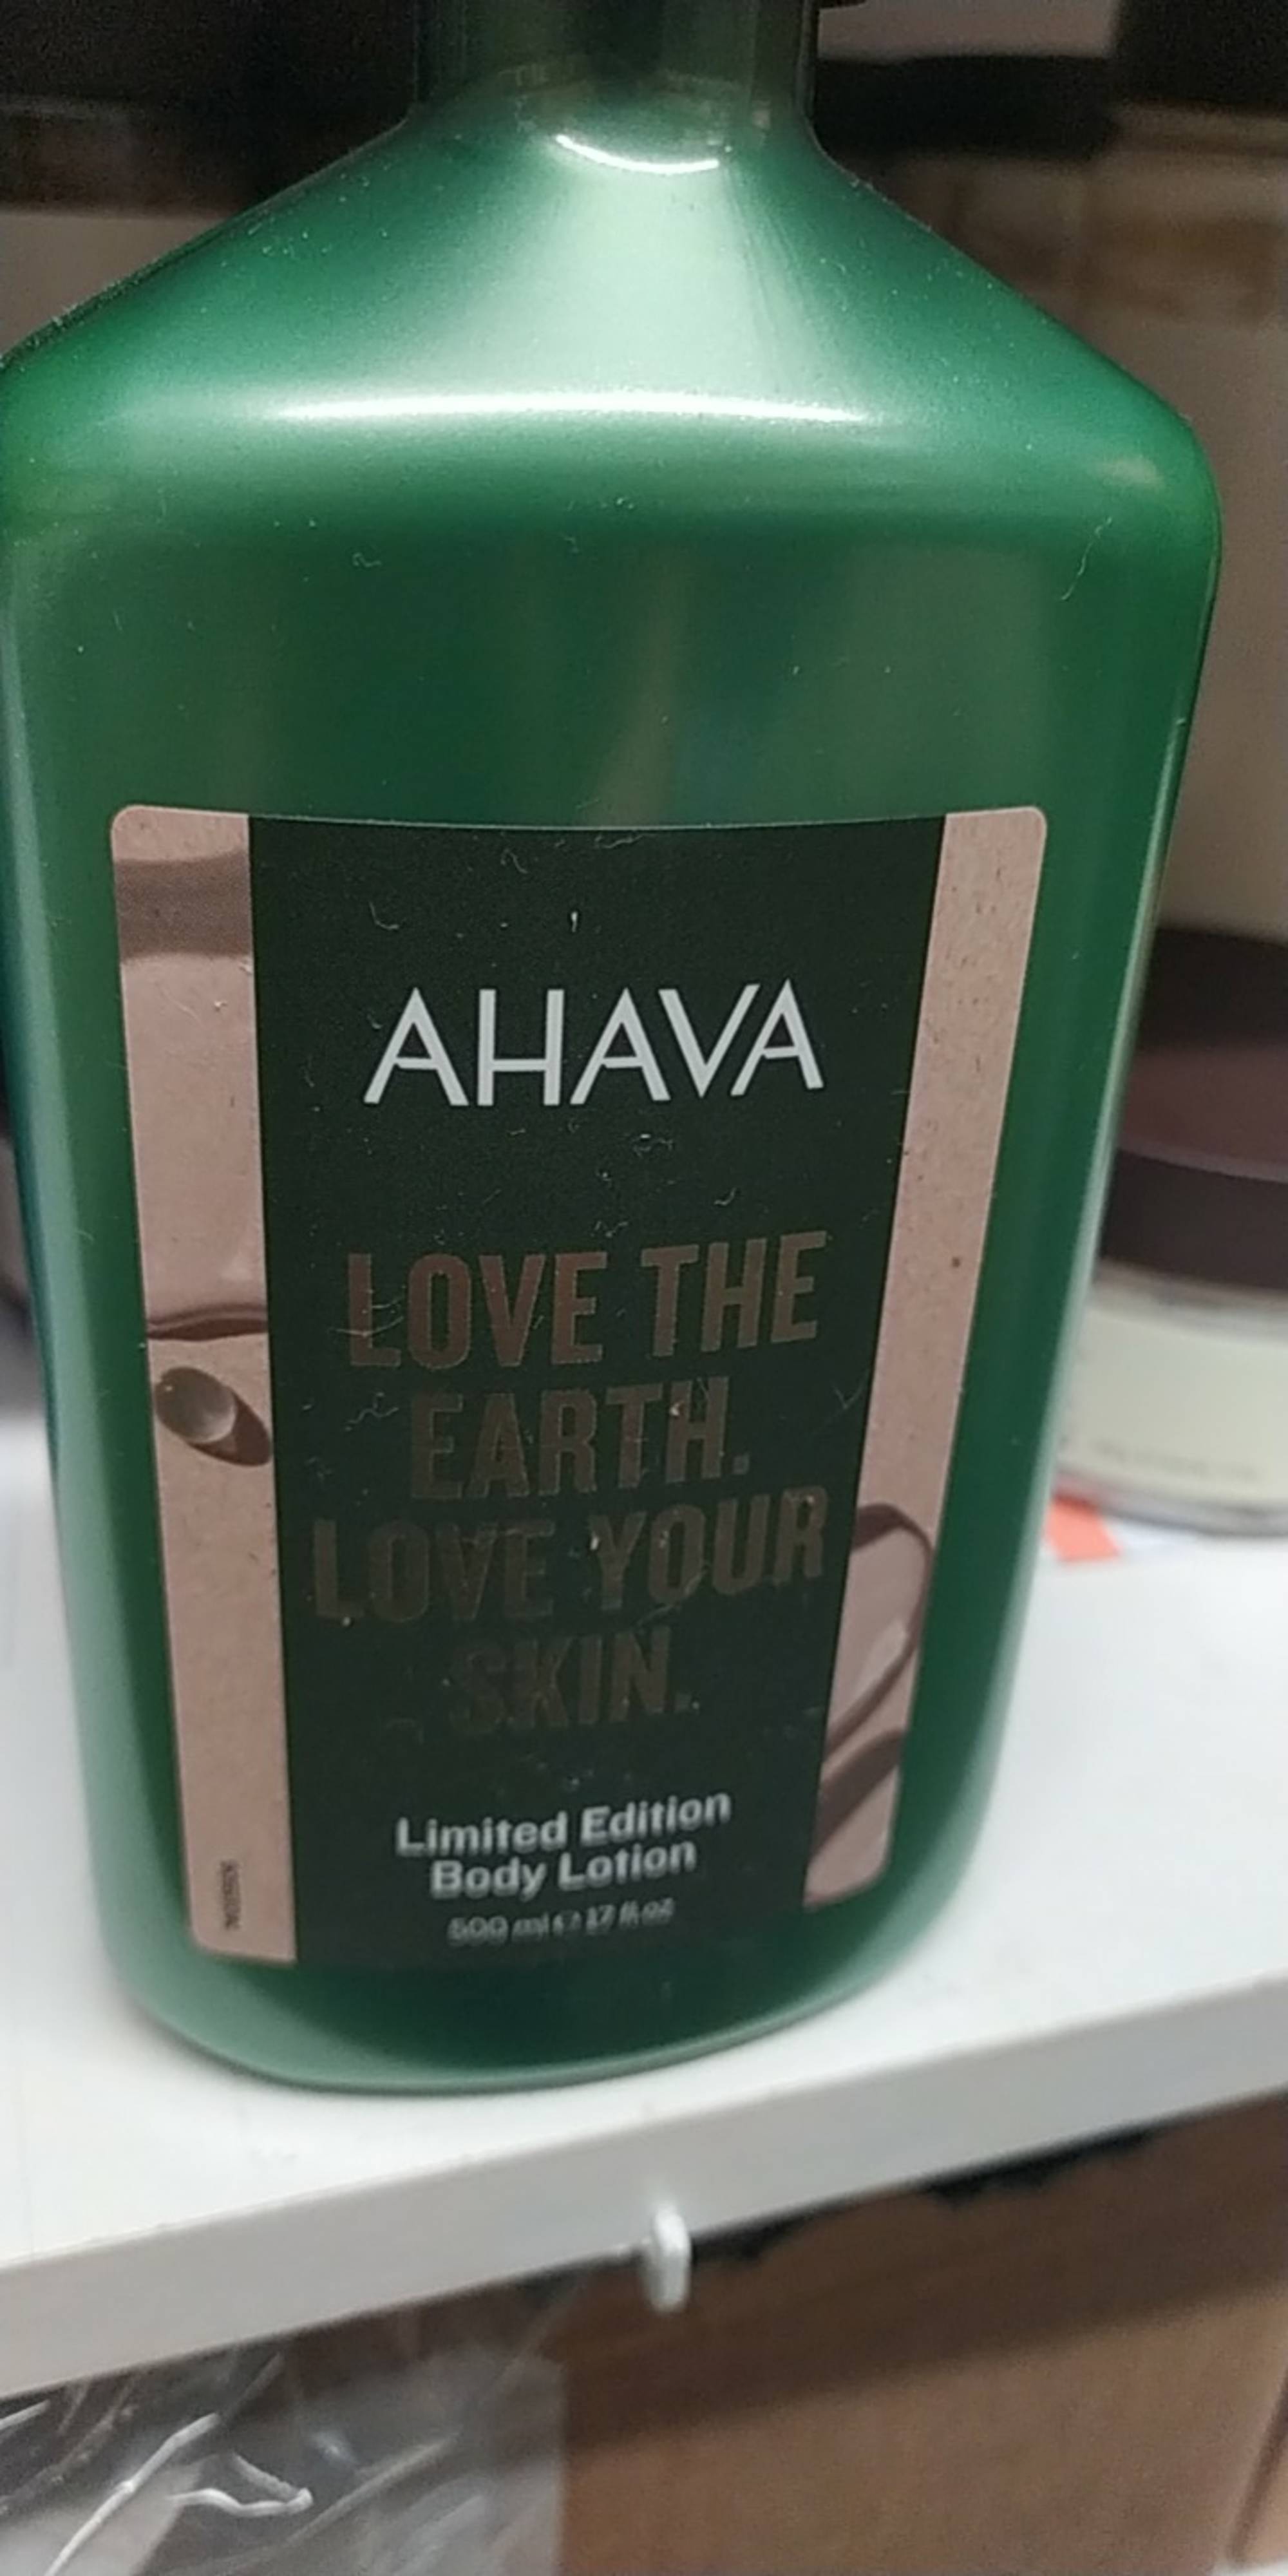 AHAVA - Love the earth. Eart your skin - Body lotion